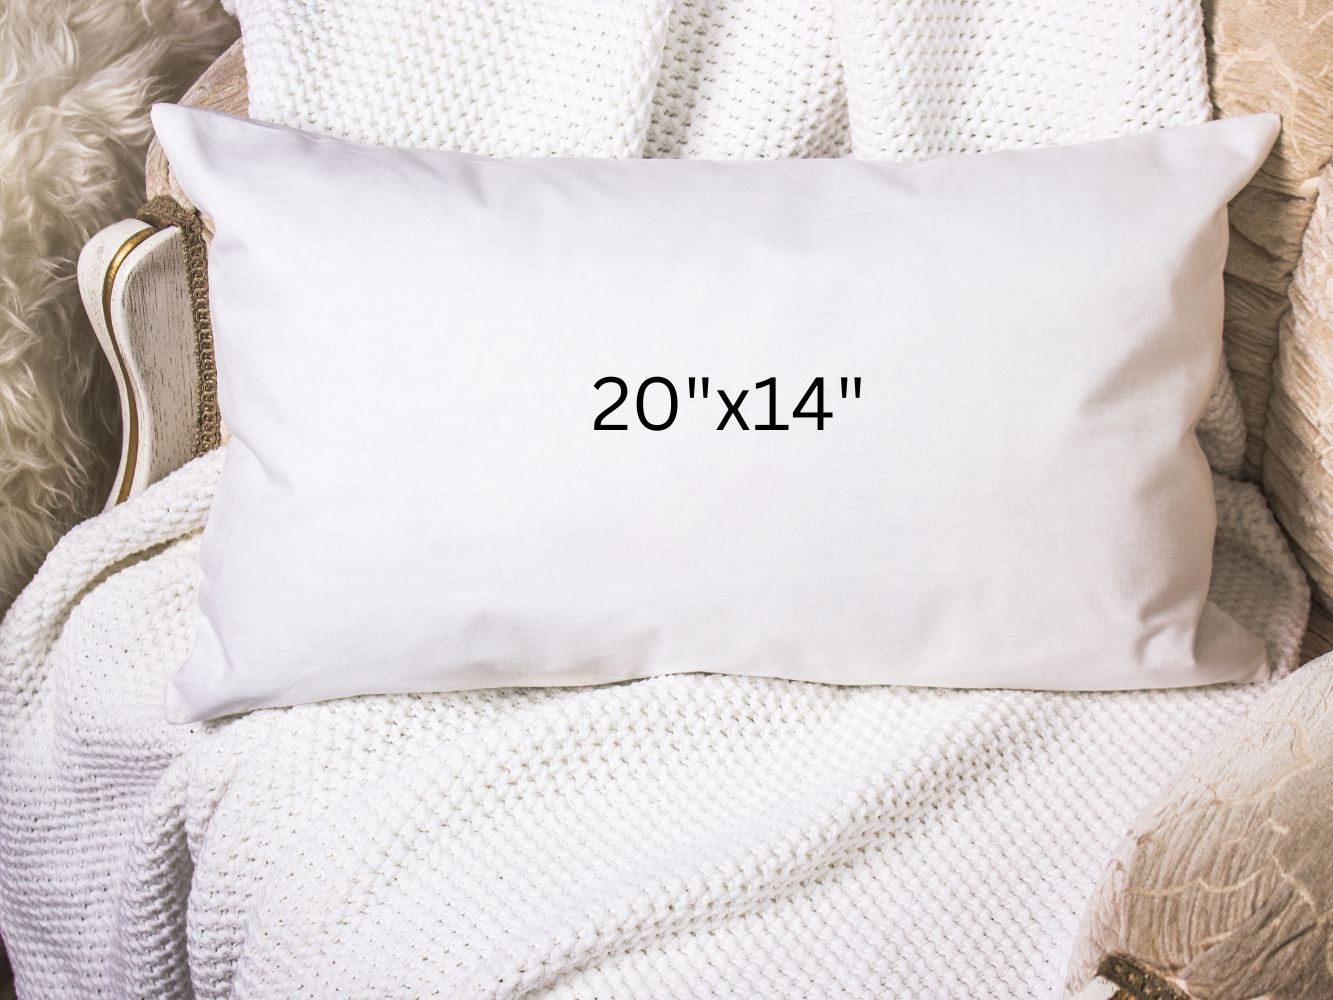 Lantsa Gifts Lumbar Pillow Size Guide